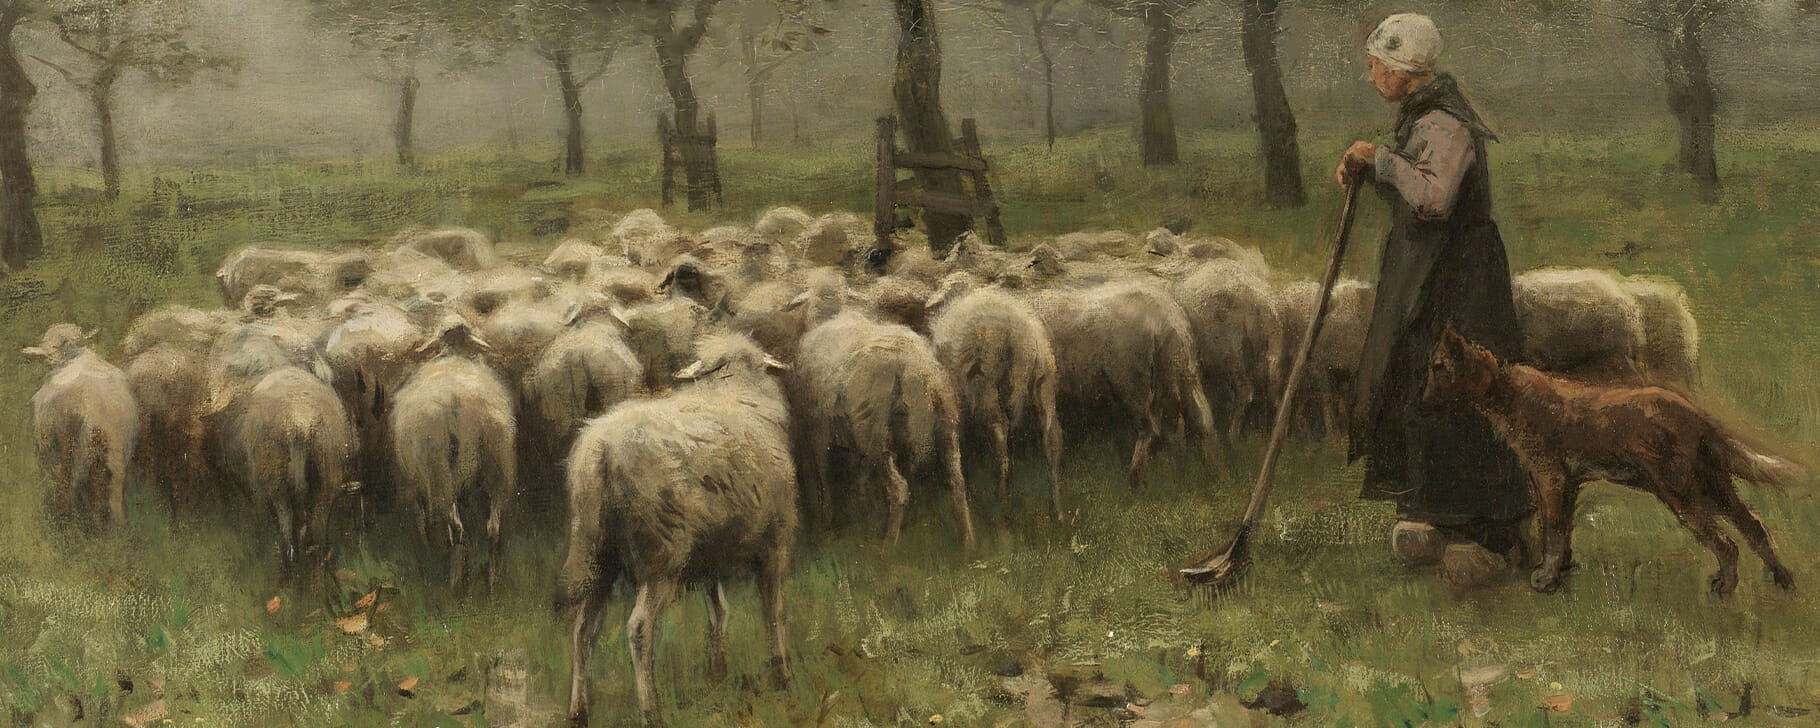 Sheep painting detail